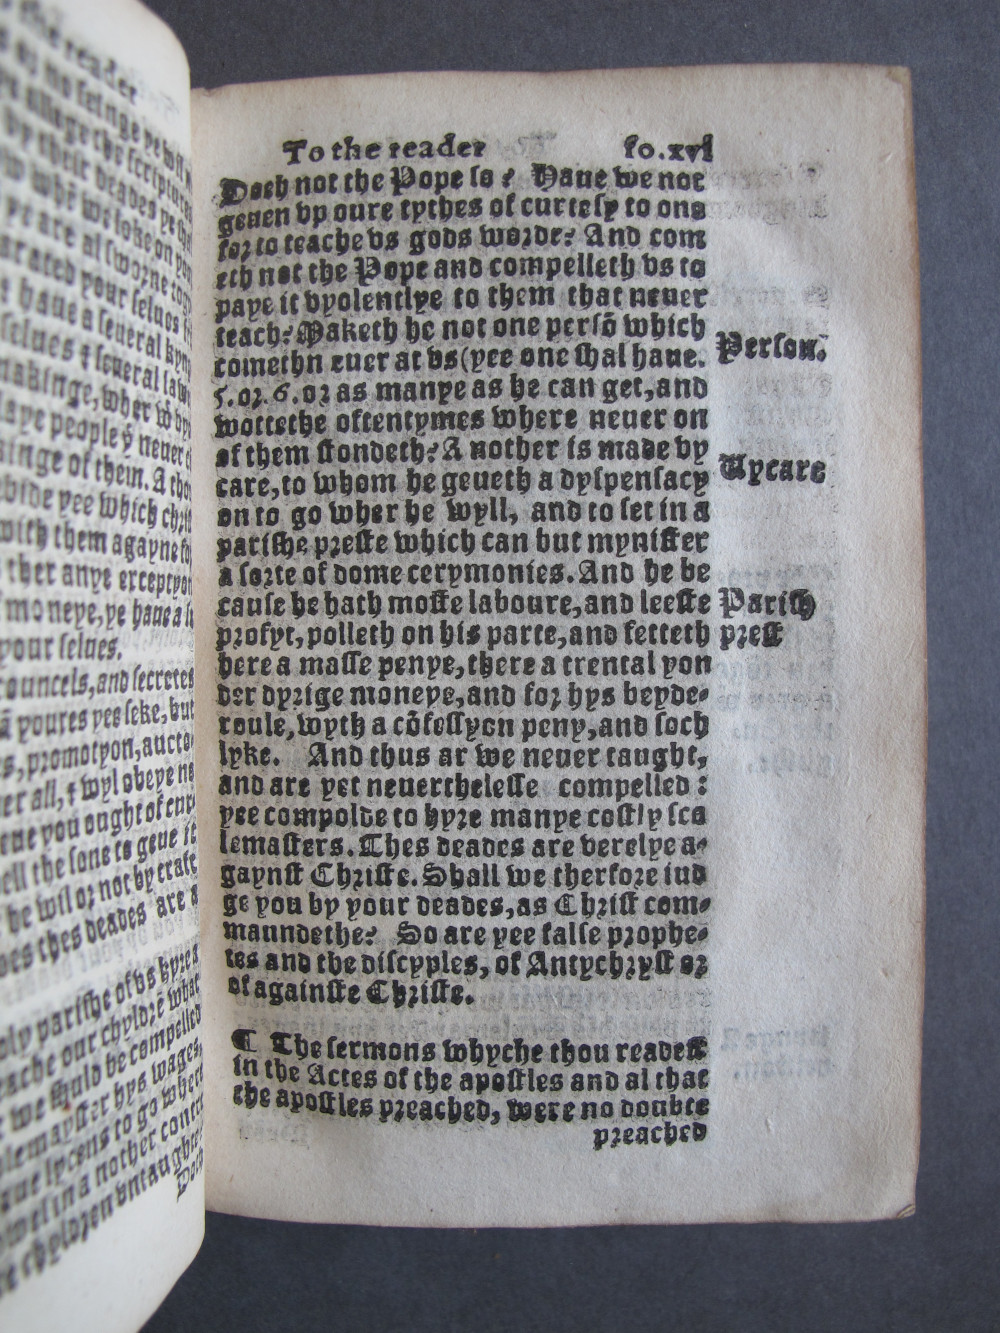 1 Folio B8 recto